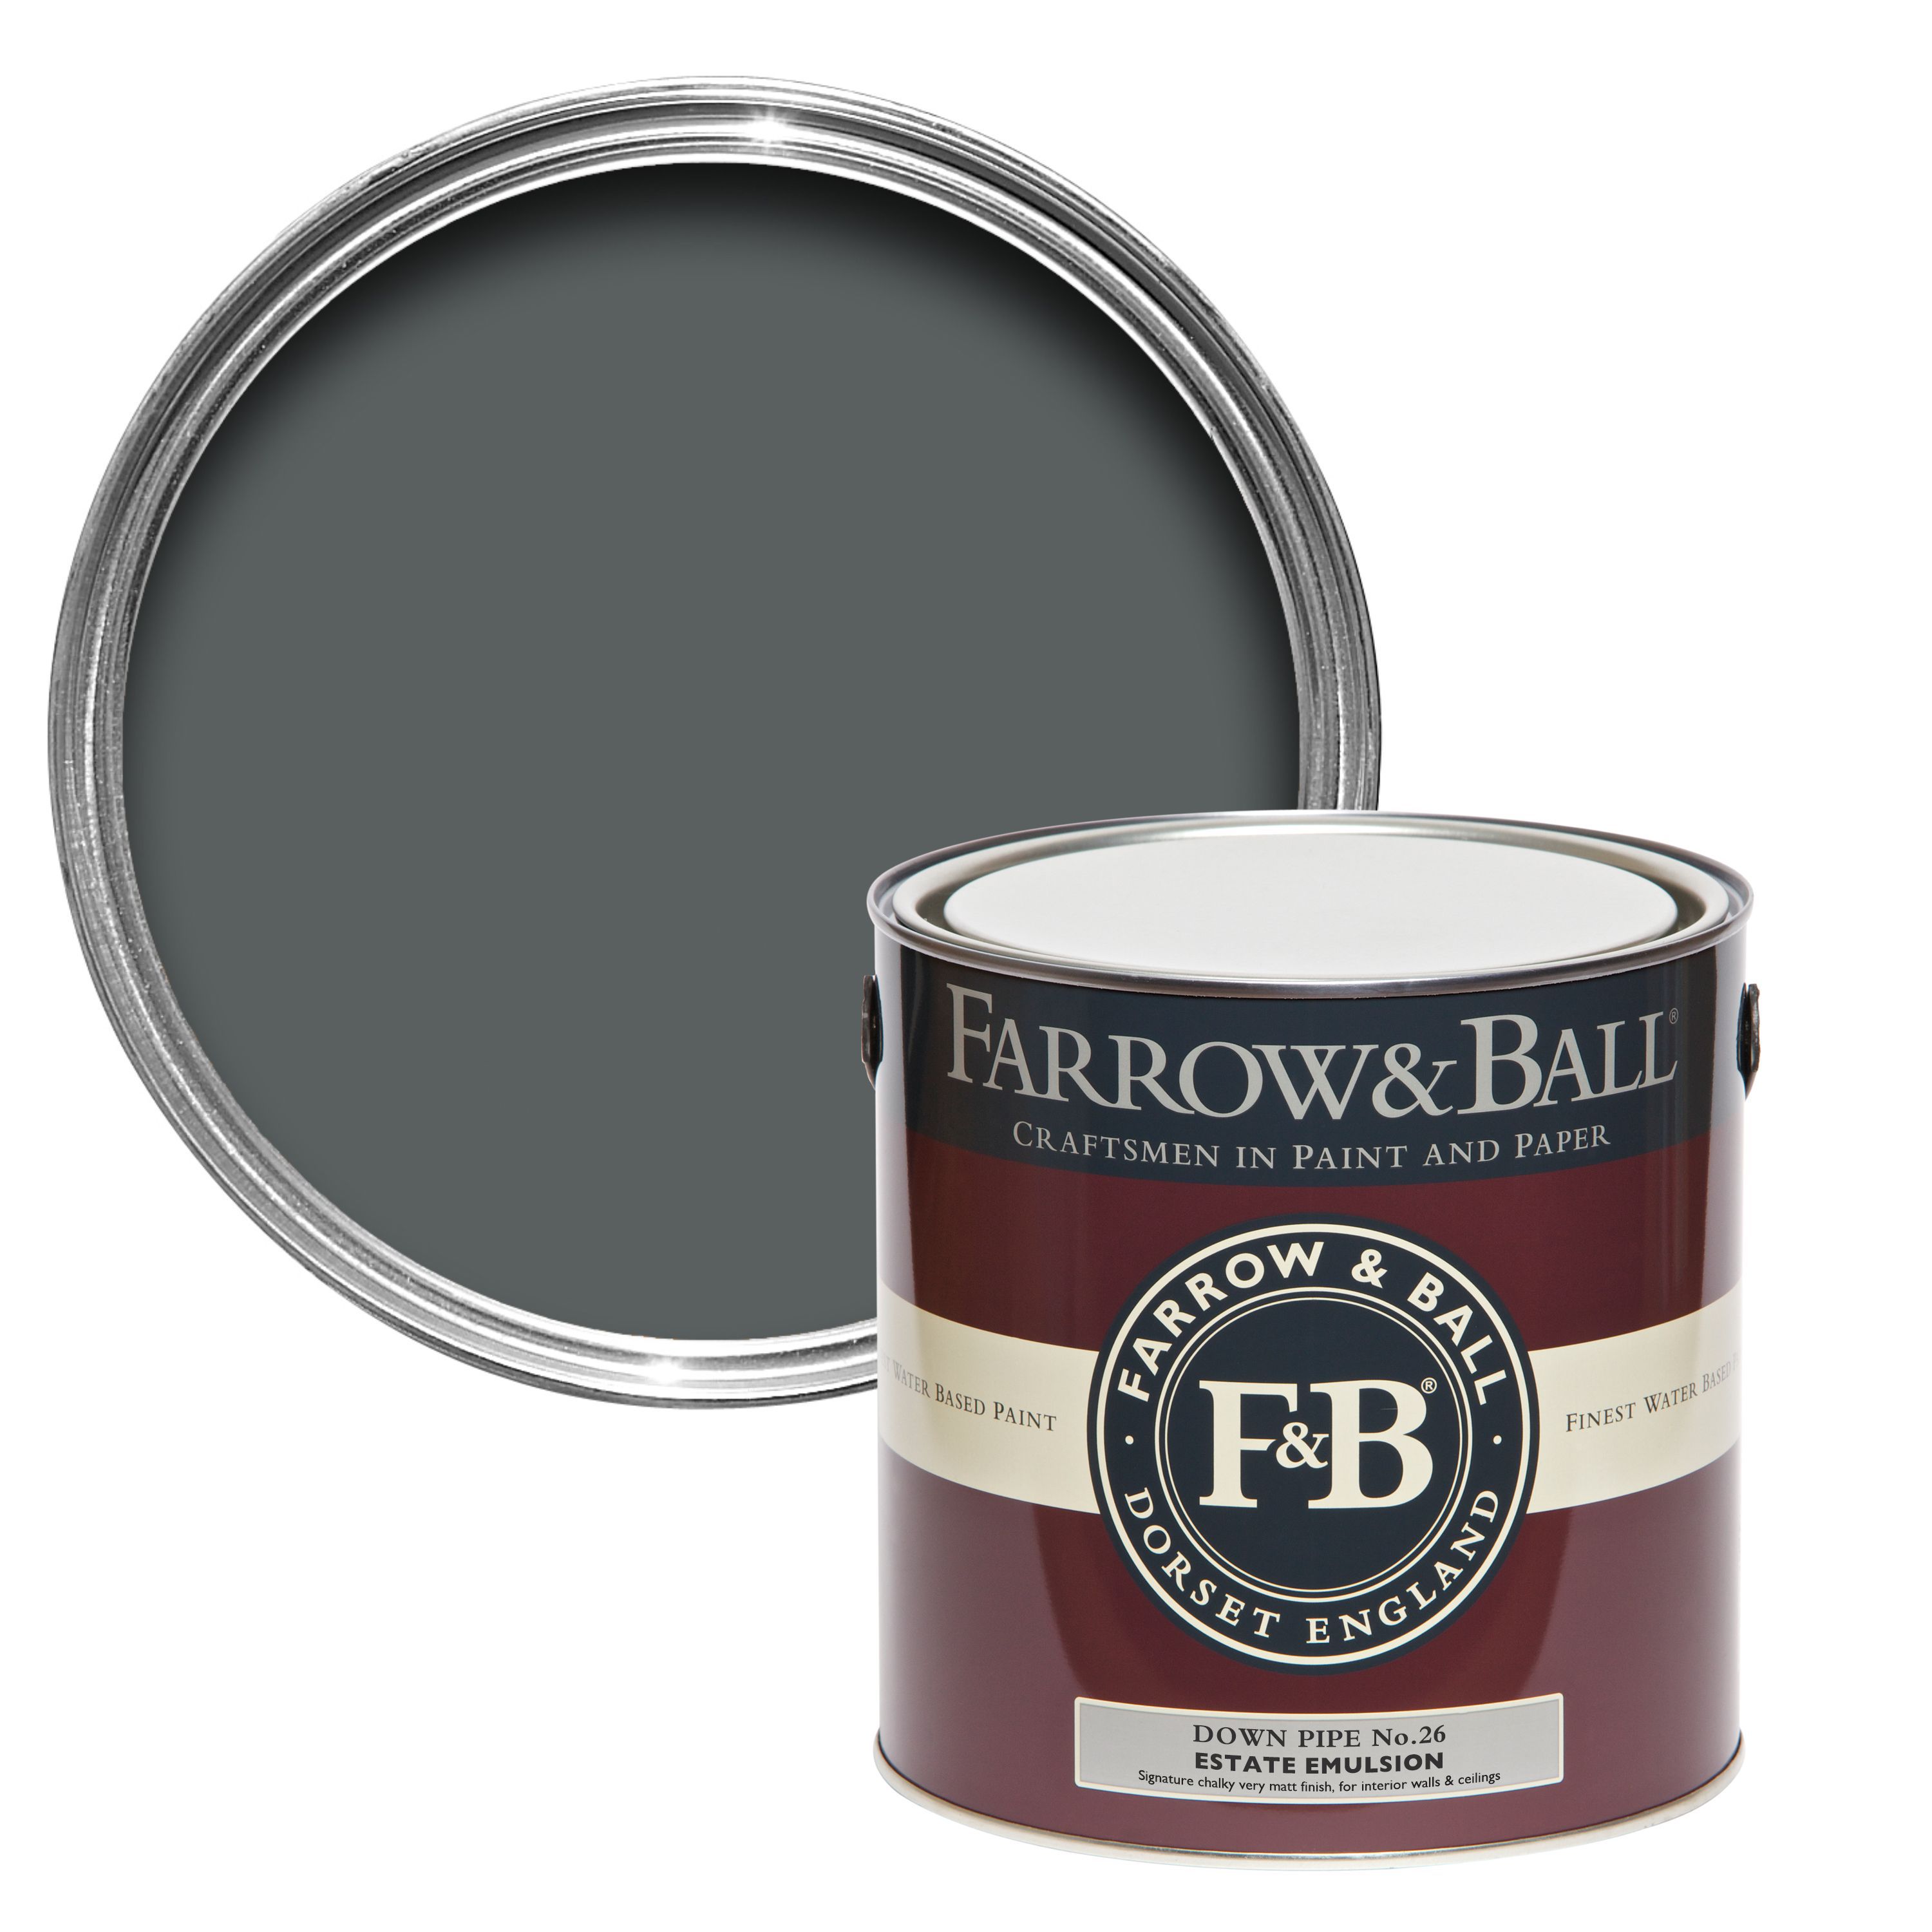 Farrow & Ball Estate Down pipe No.26 Matt Emulsion paint, 2.5L Tester pot